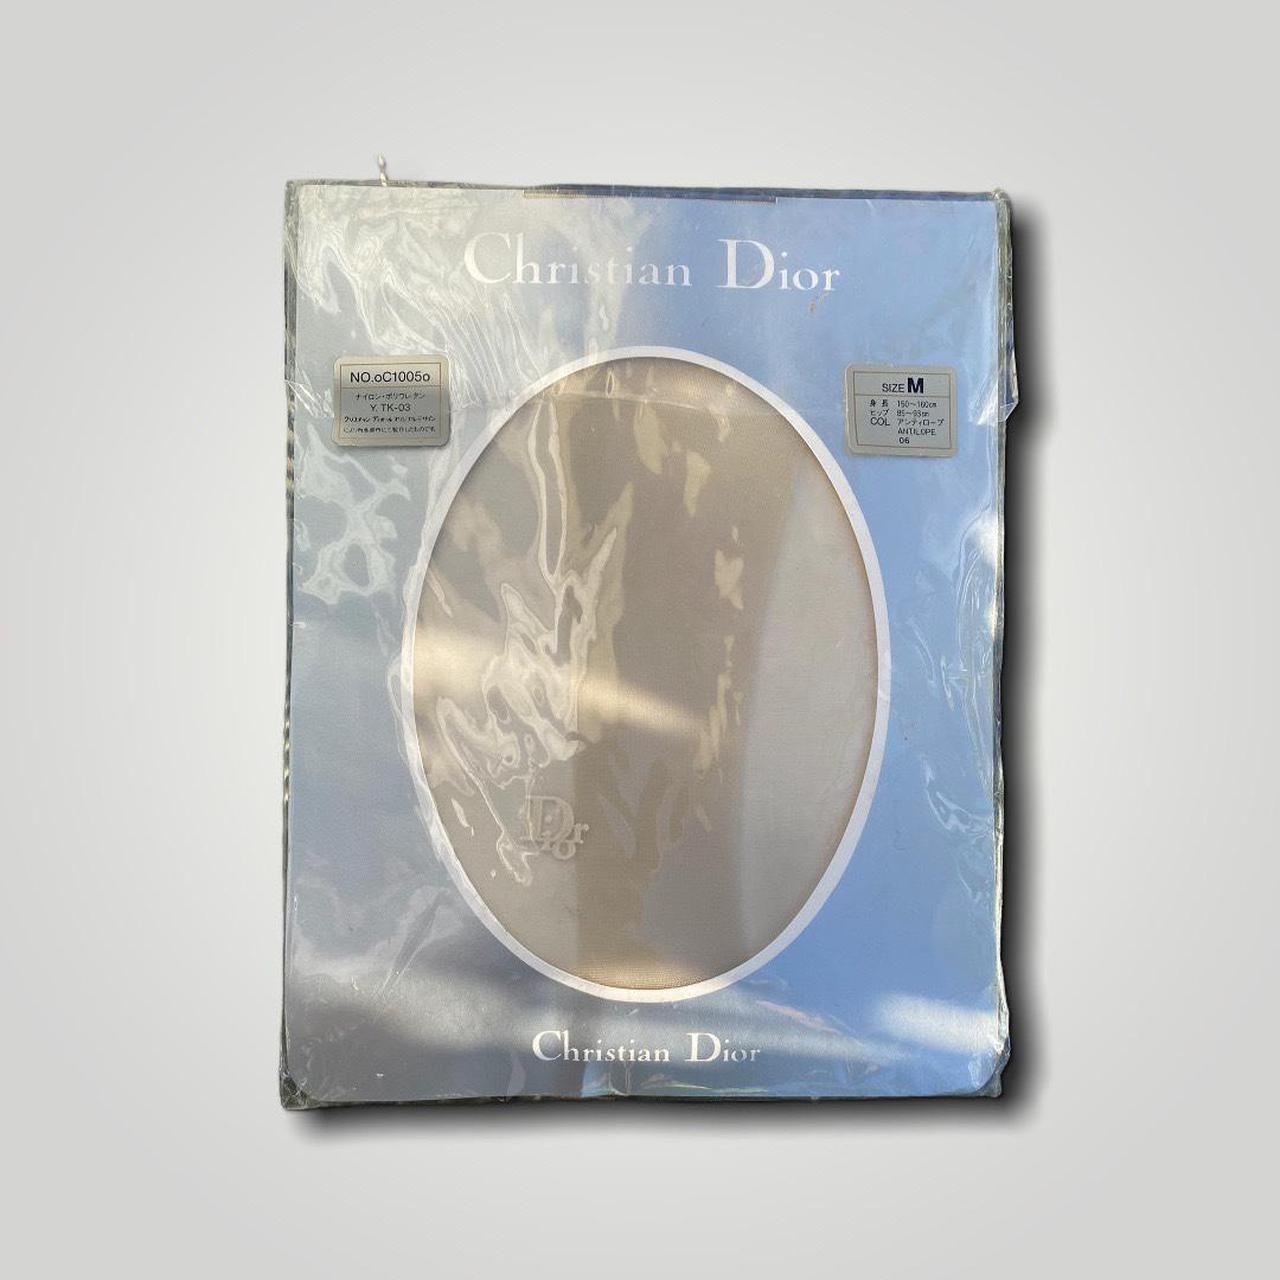 Dior tights - Depop